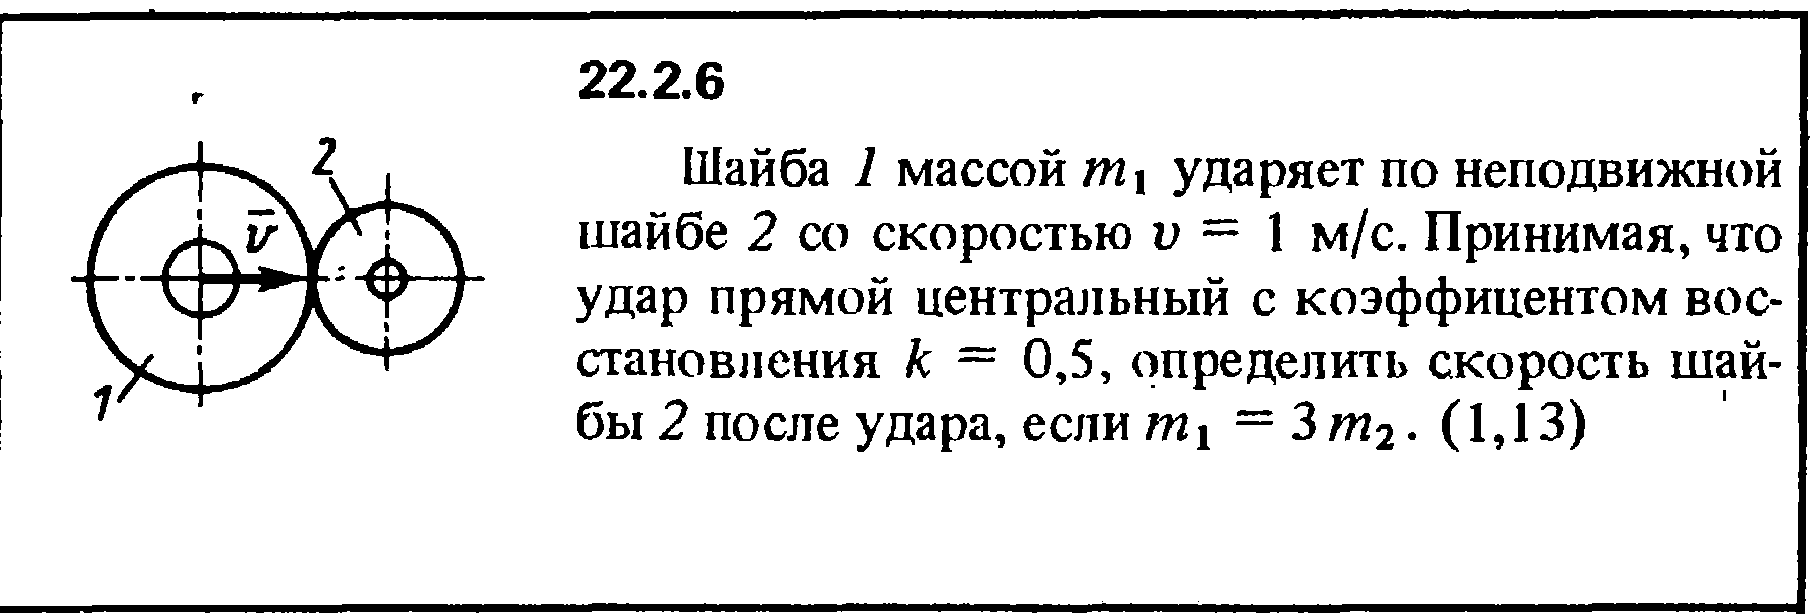 Решение 22.2.6 из сборника (решебника) Кепе О.Е. 1989